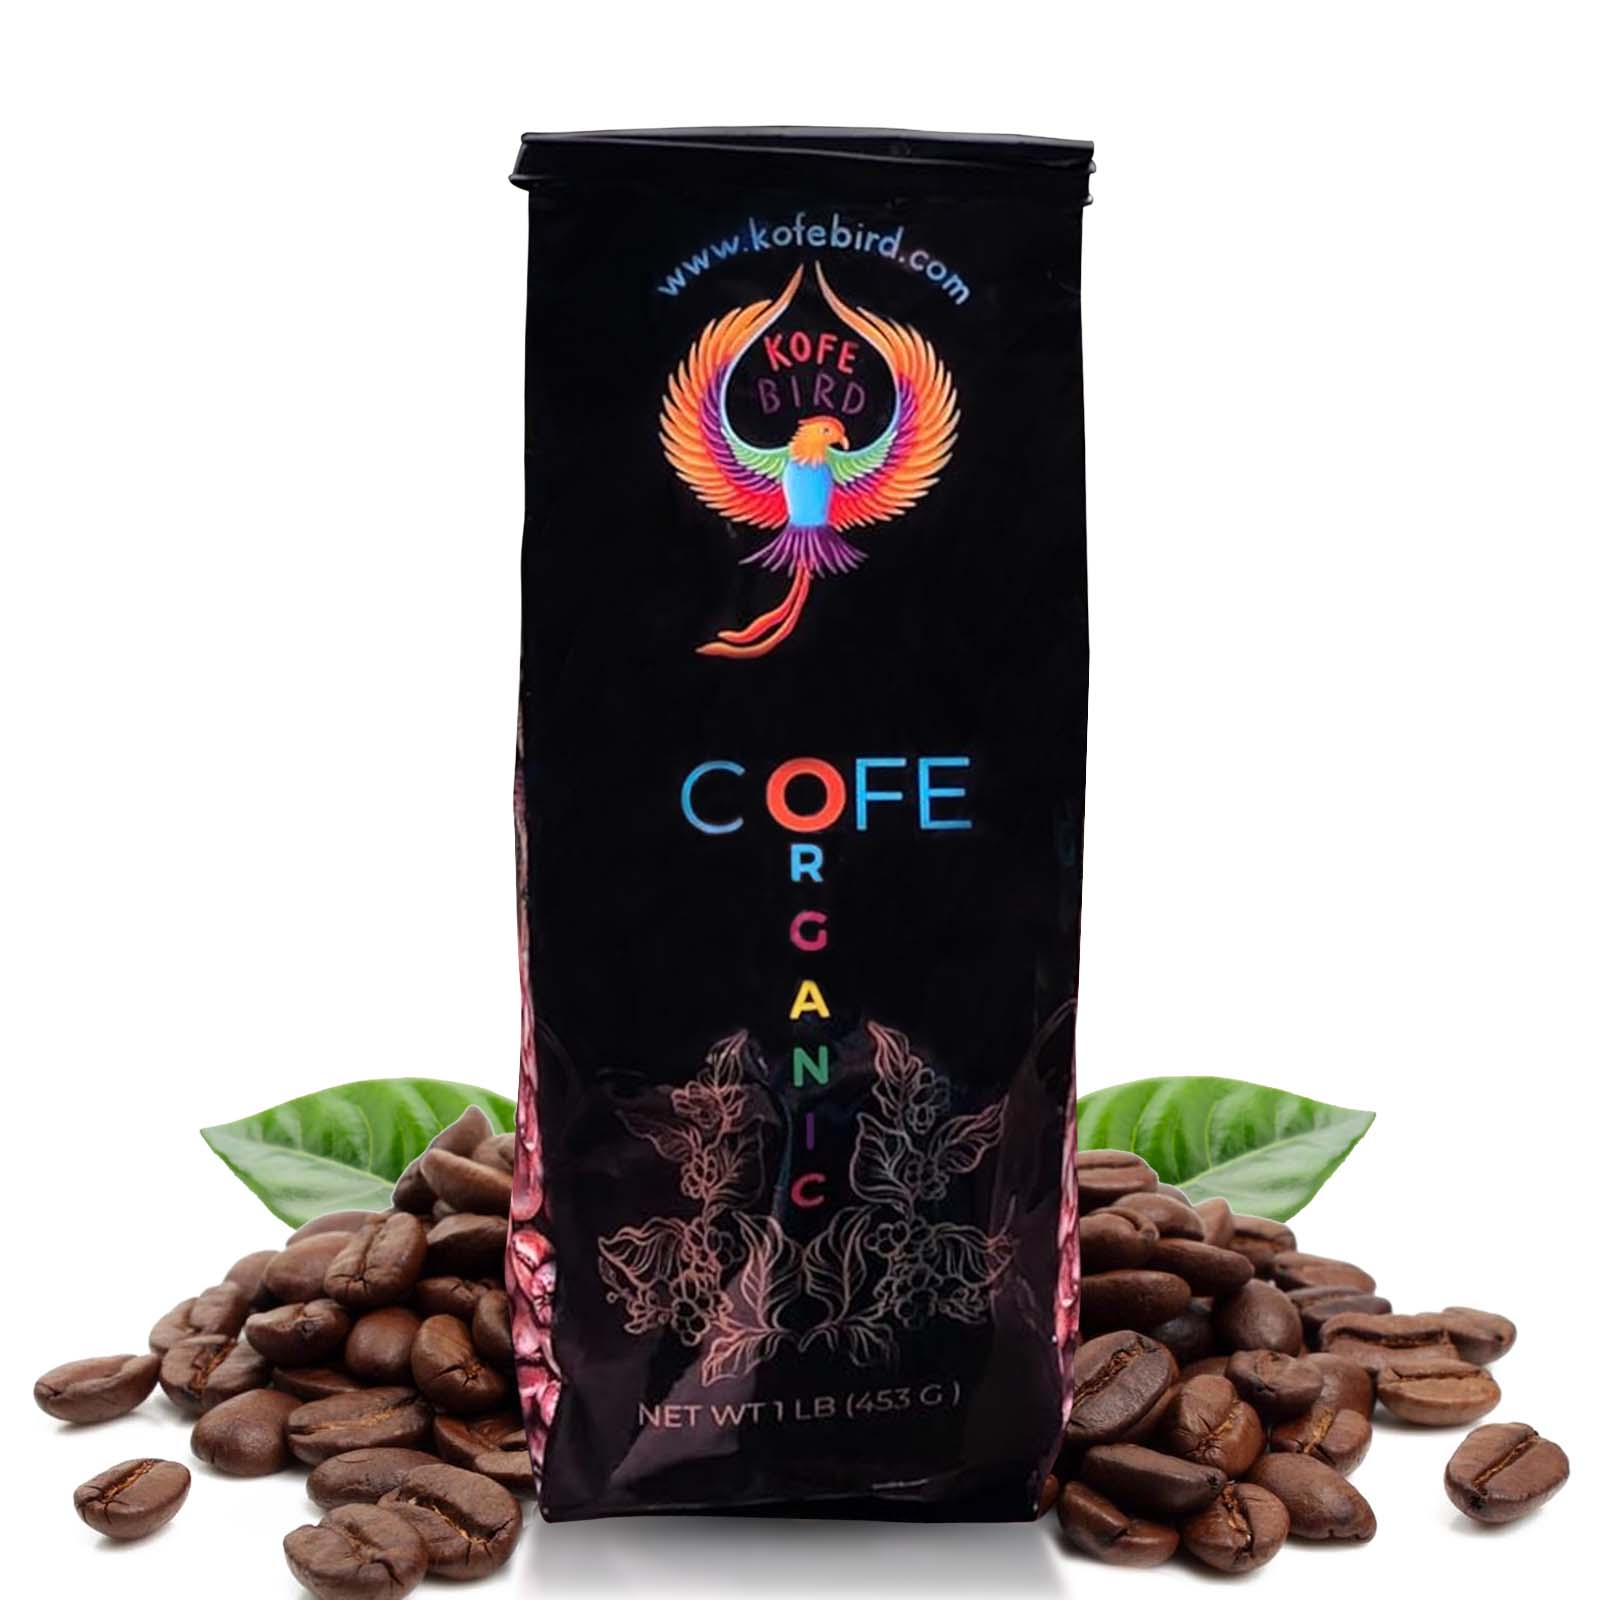 Kofe Bird Premium Specialty Coffee - 100% Arabica